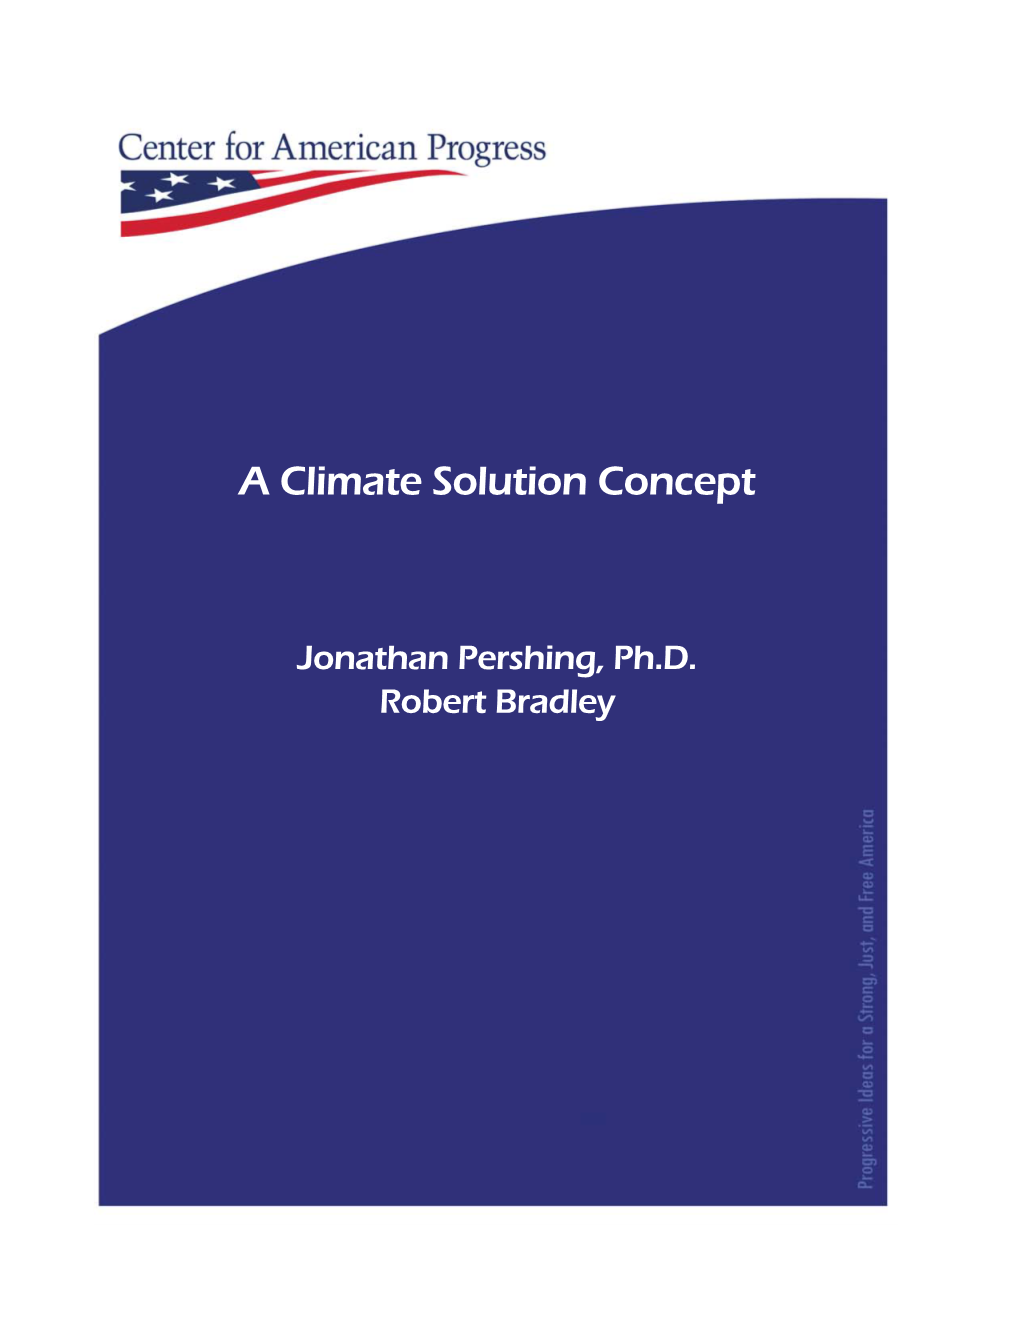 A Climate Solution Concept